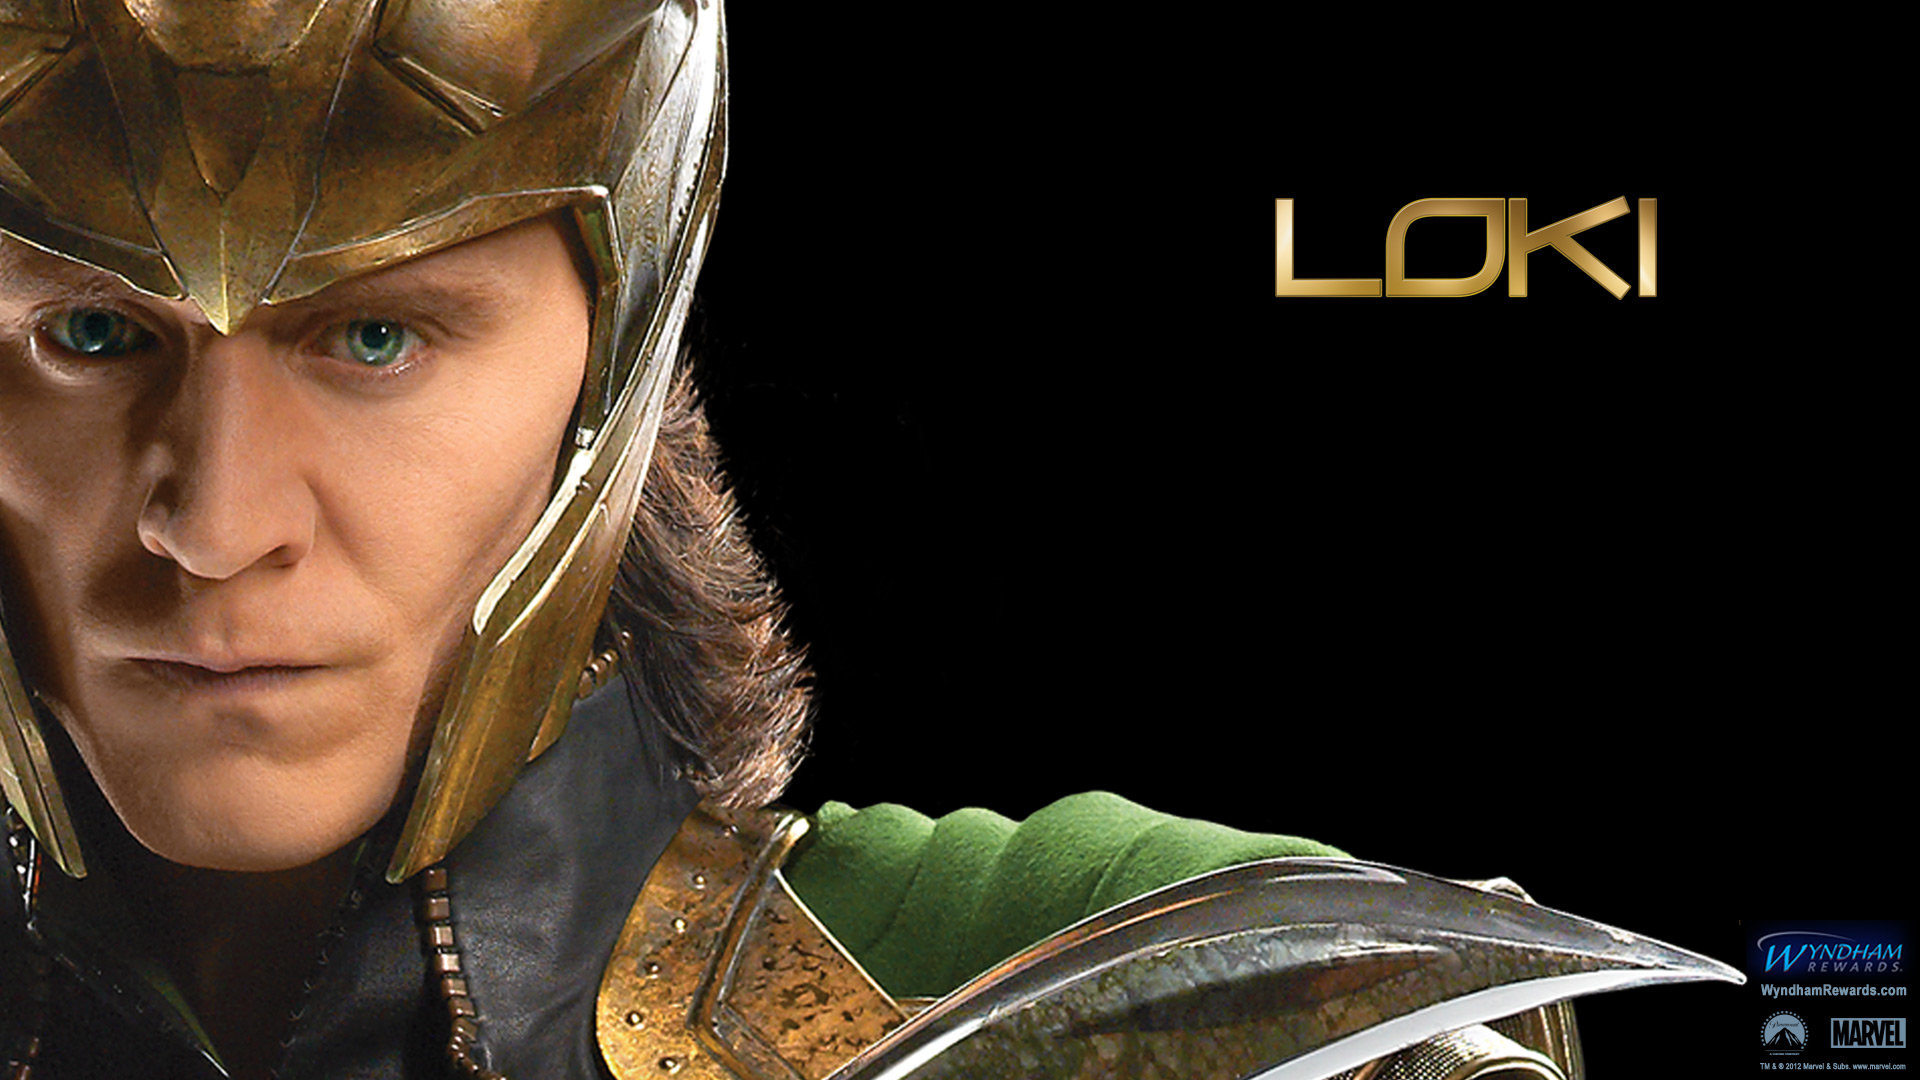 Free Download The Avengers Wallpaper Id - Loki Wallpaper Hd 1080p -  1920x1080 Wallpaper 